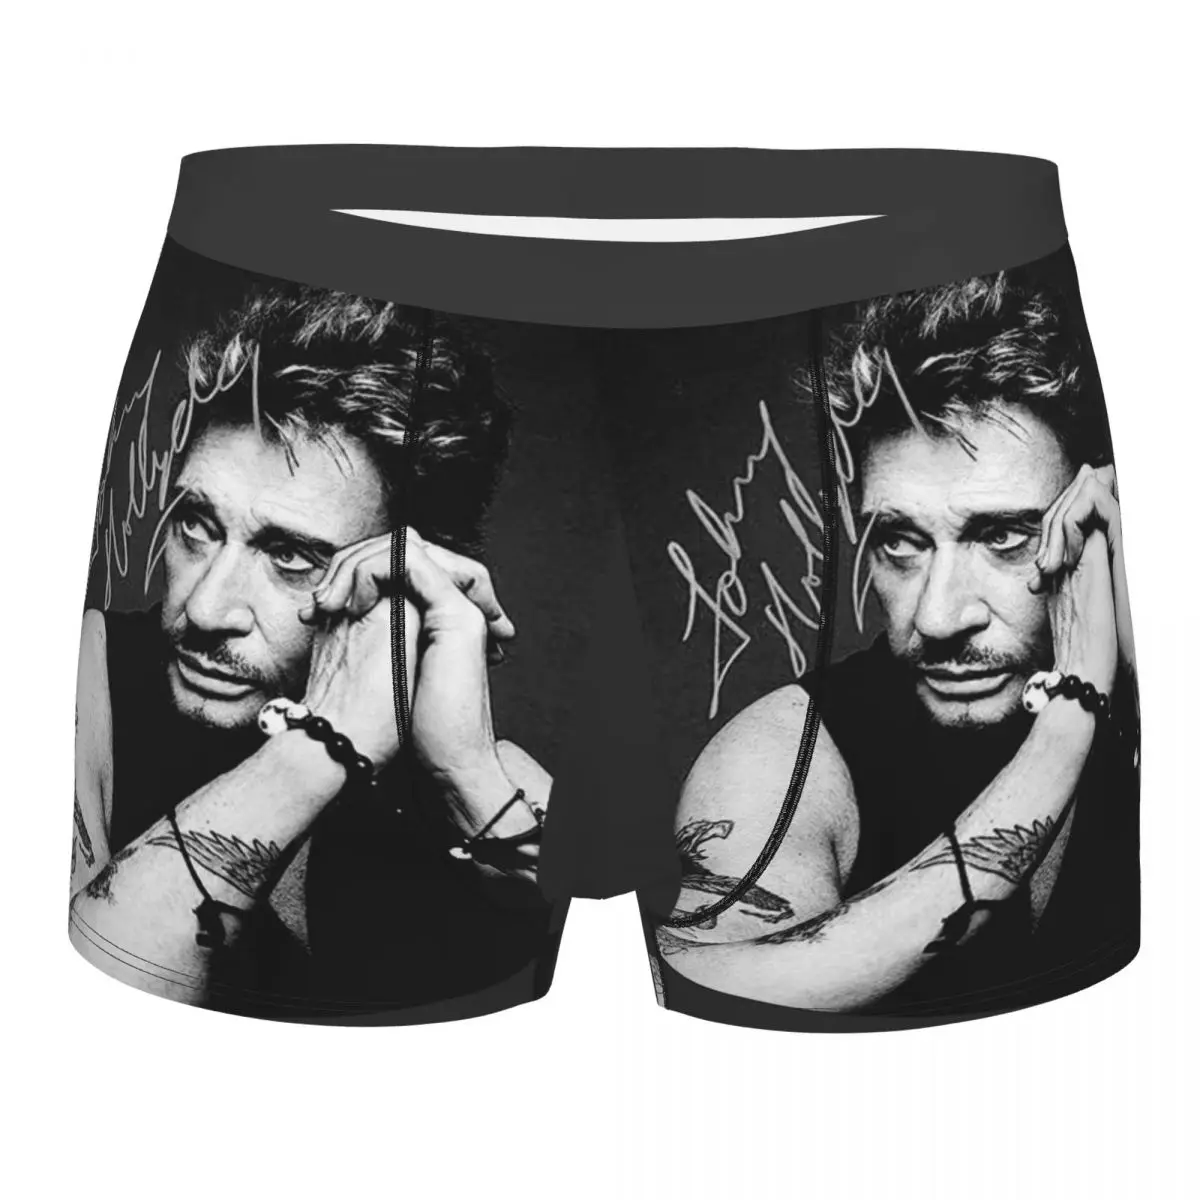 France Rock Singer CrewJohnny Hallyday Men Boxer Briefs Underpants Highly Breathable High Quality Gift Idea mark kozelek rock n roll singer lp